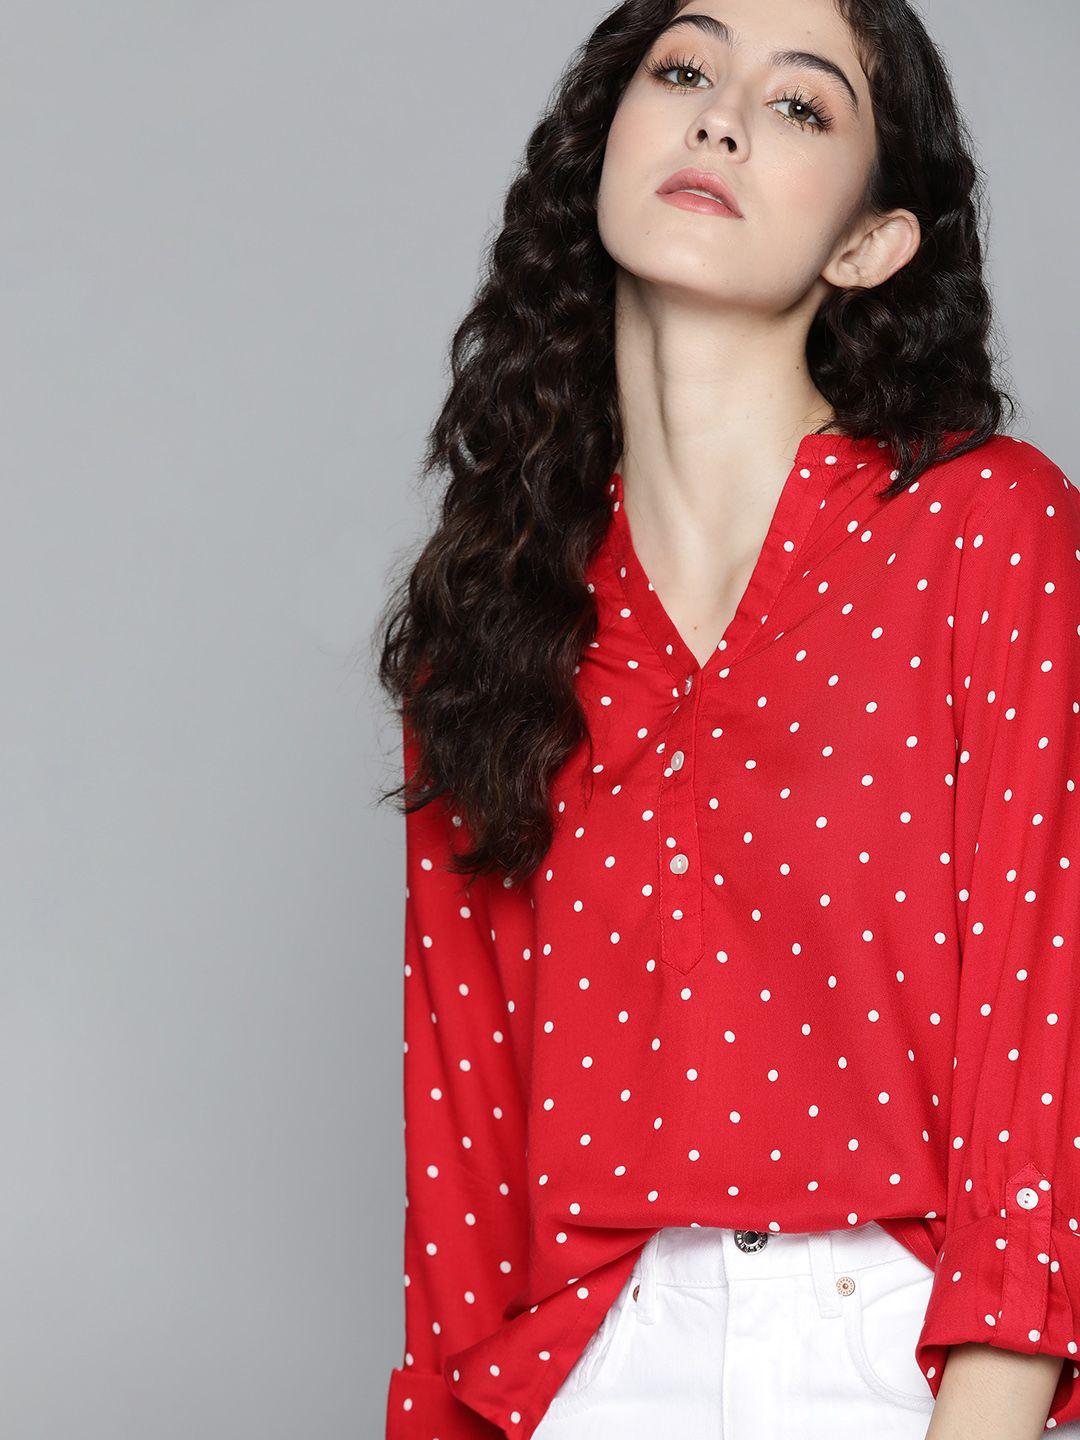 harvard-red-&-white-polka-dots-print-shirt-style-top